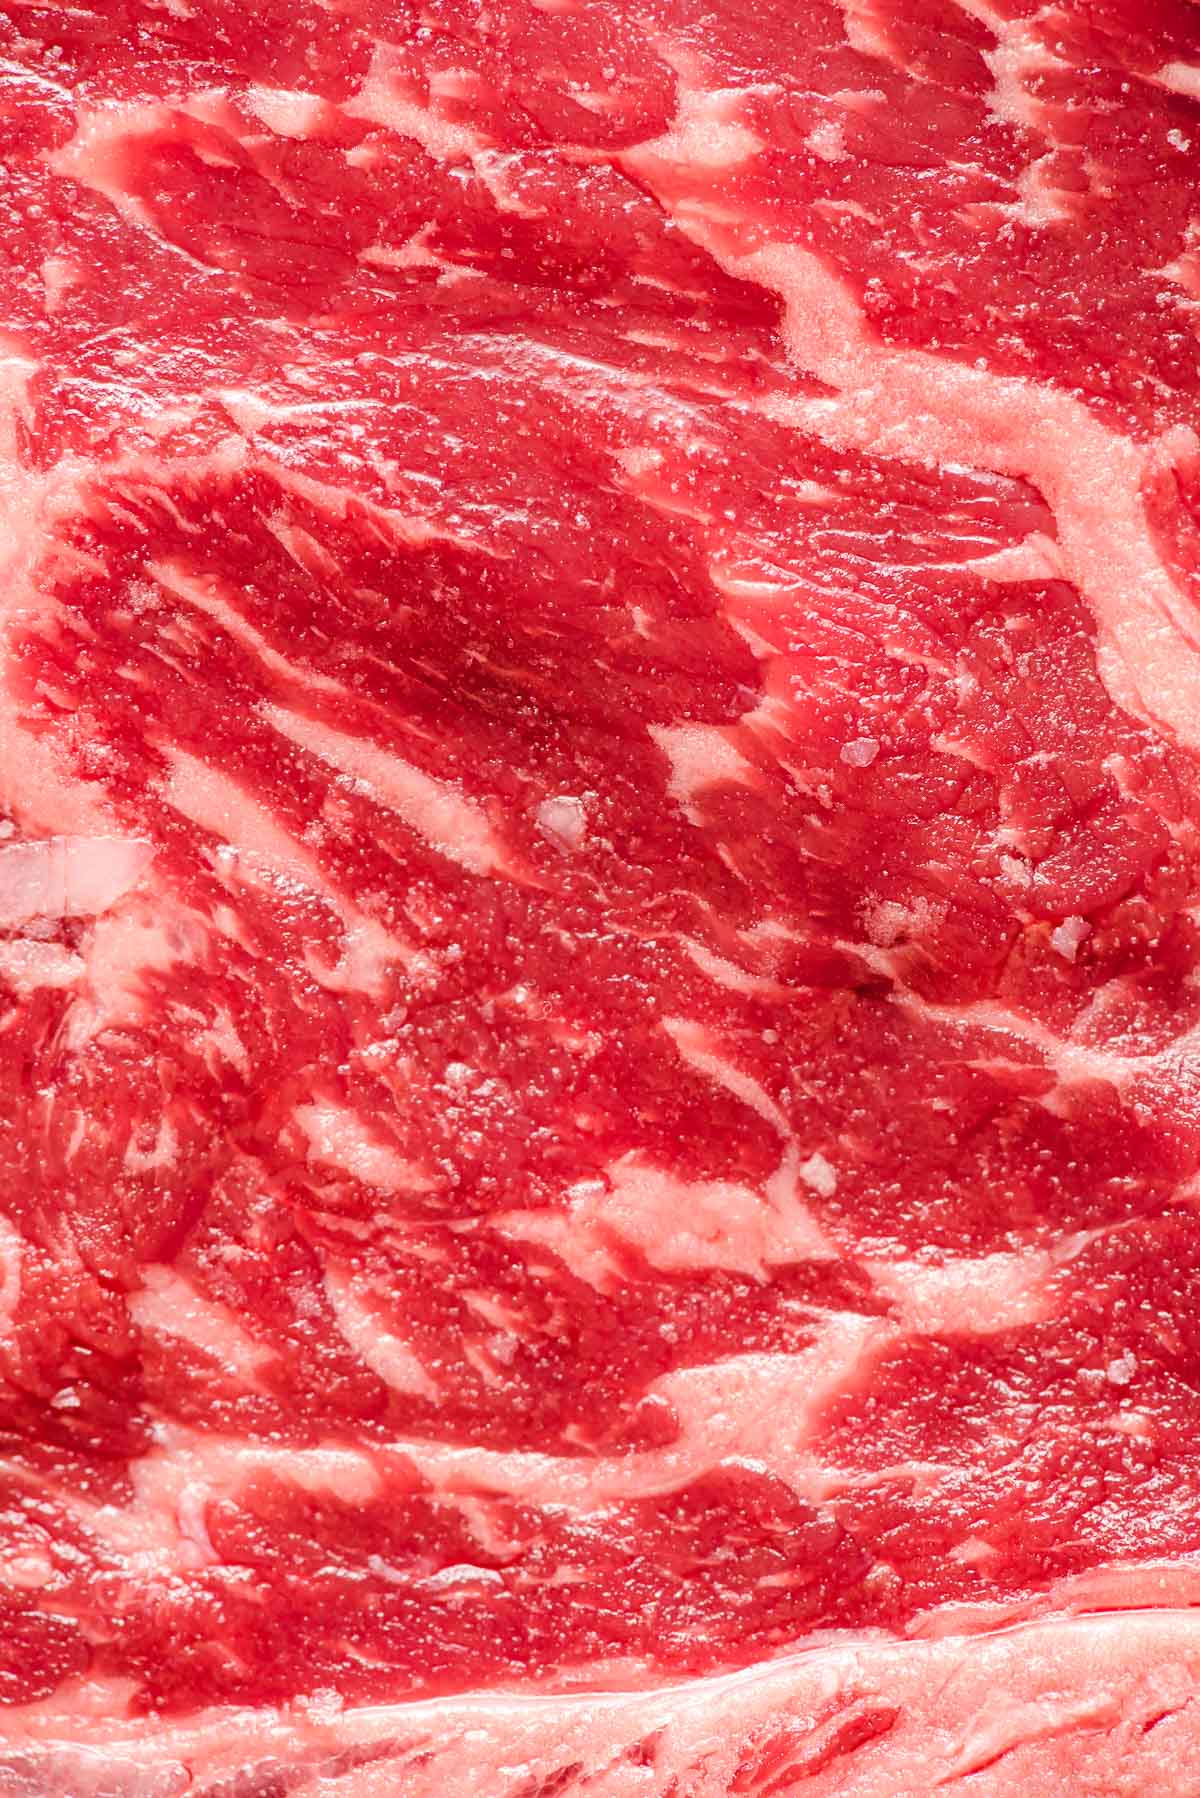 Closeup of a steak shows marbling.